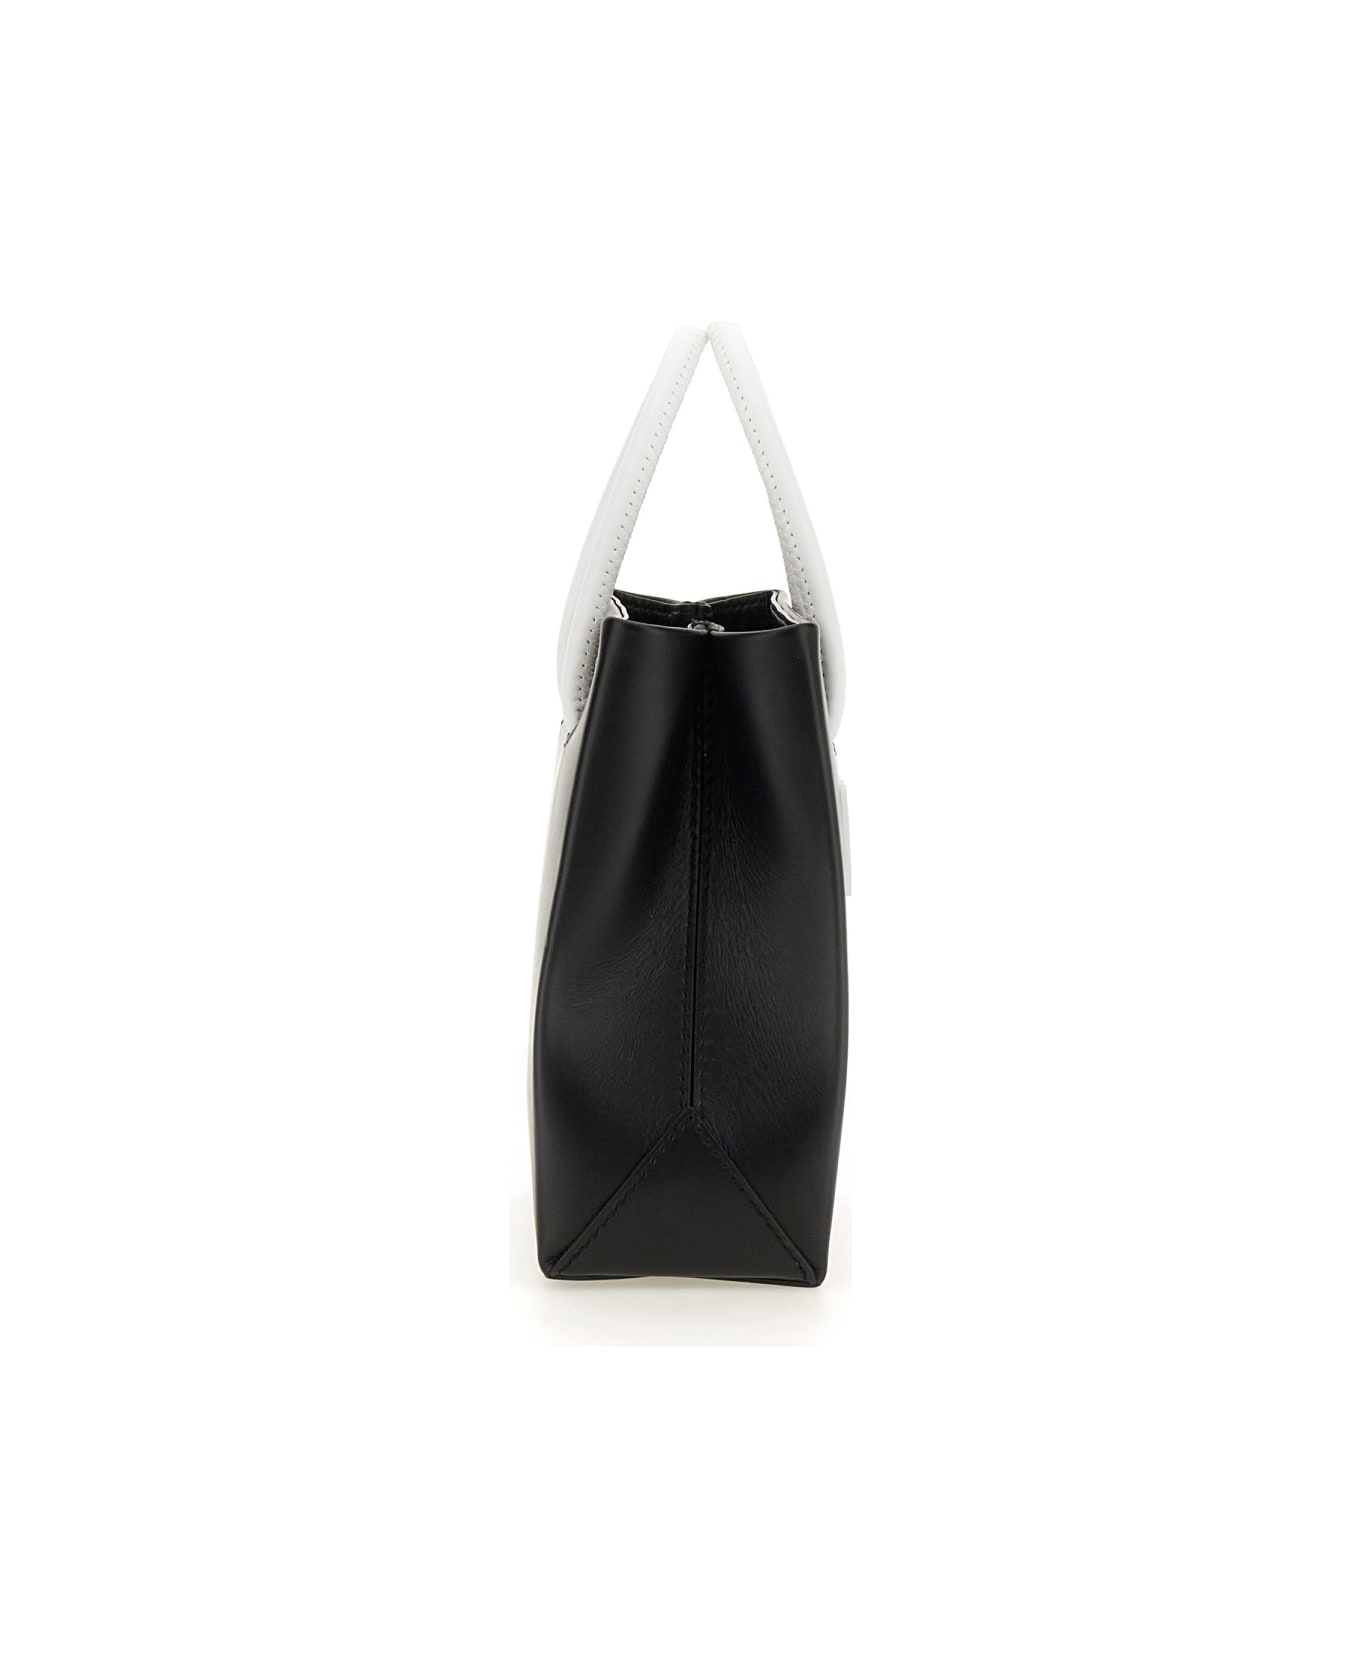 Moschino Bag With Logo - BLACK